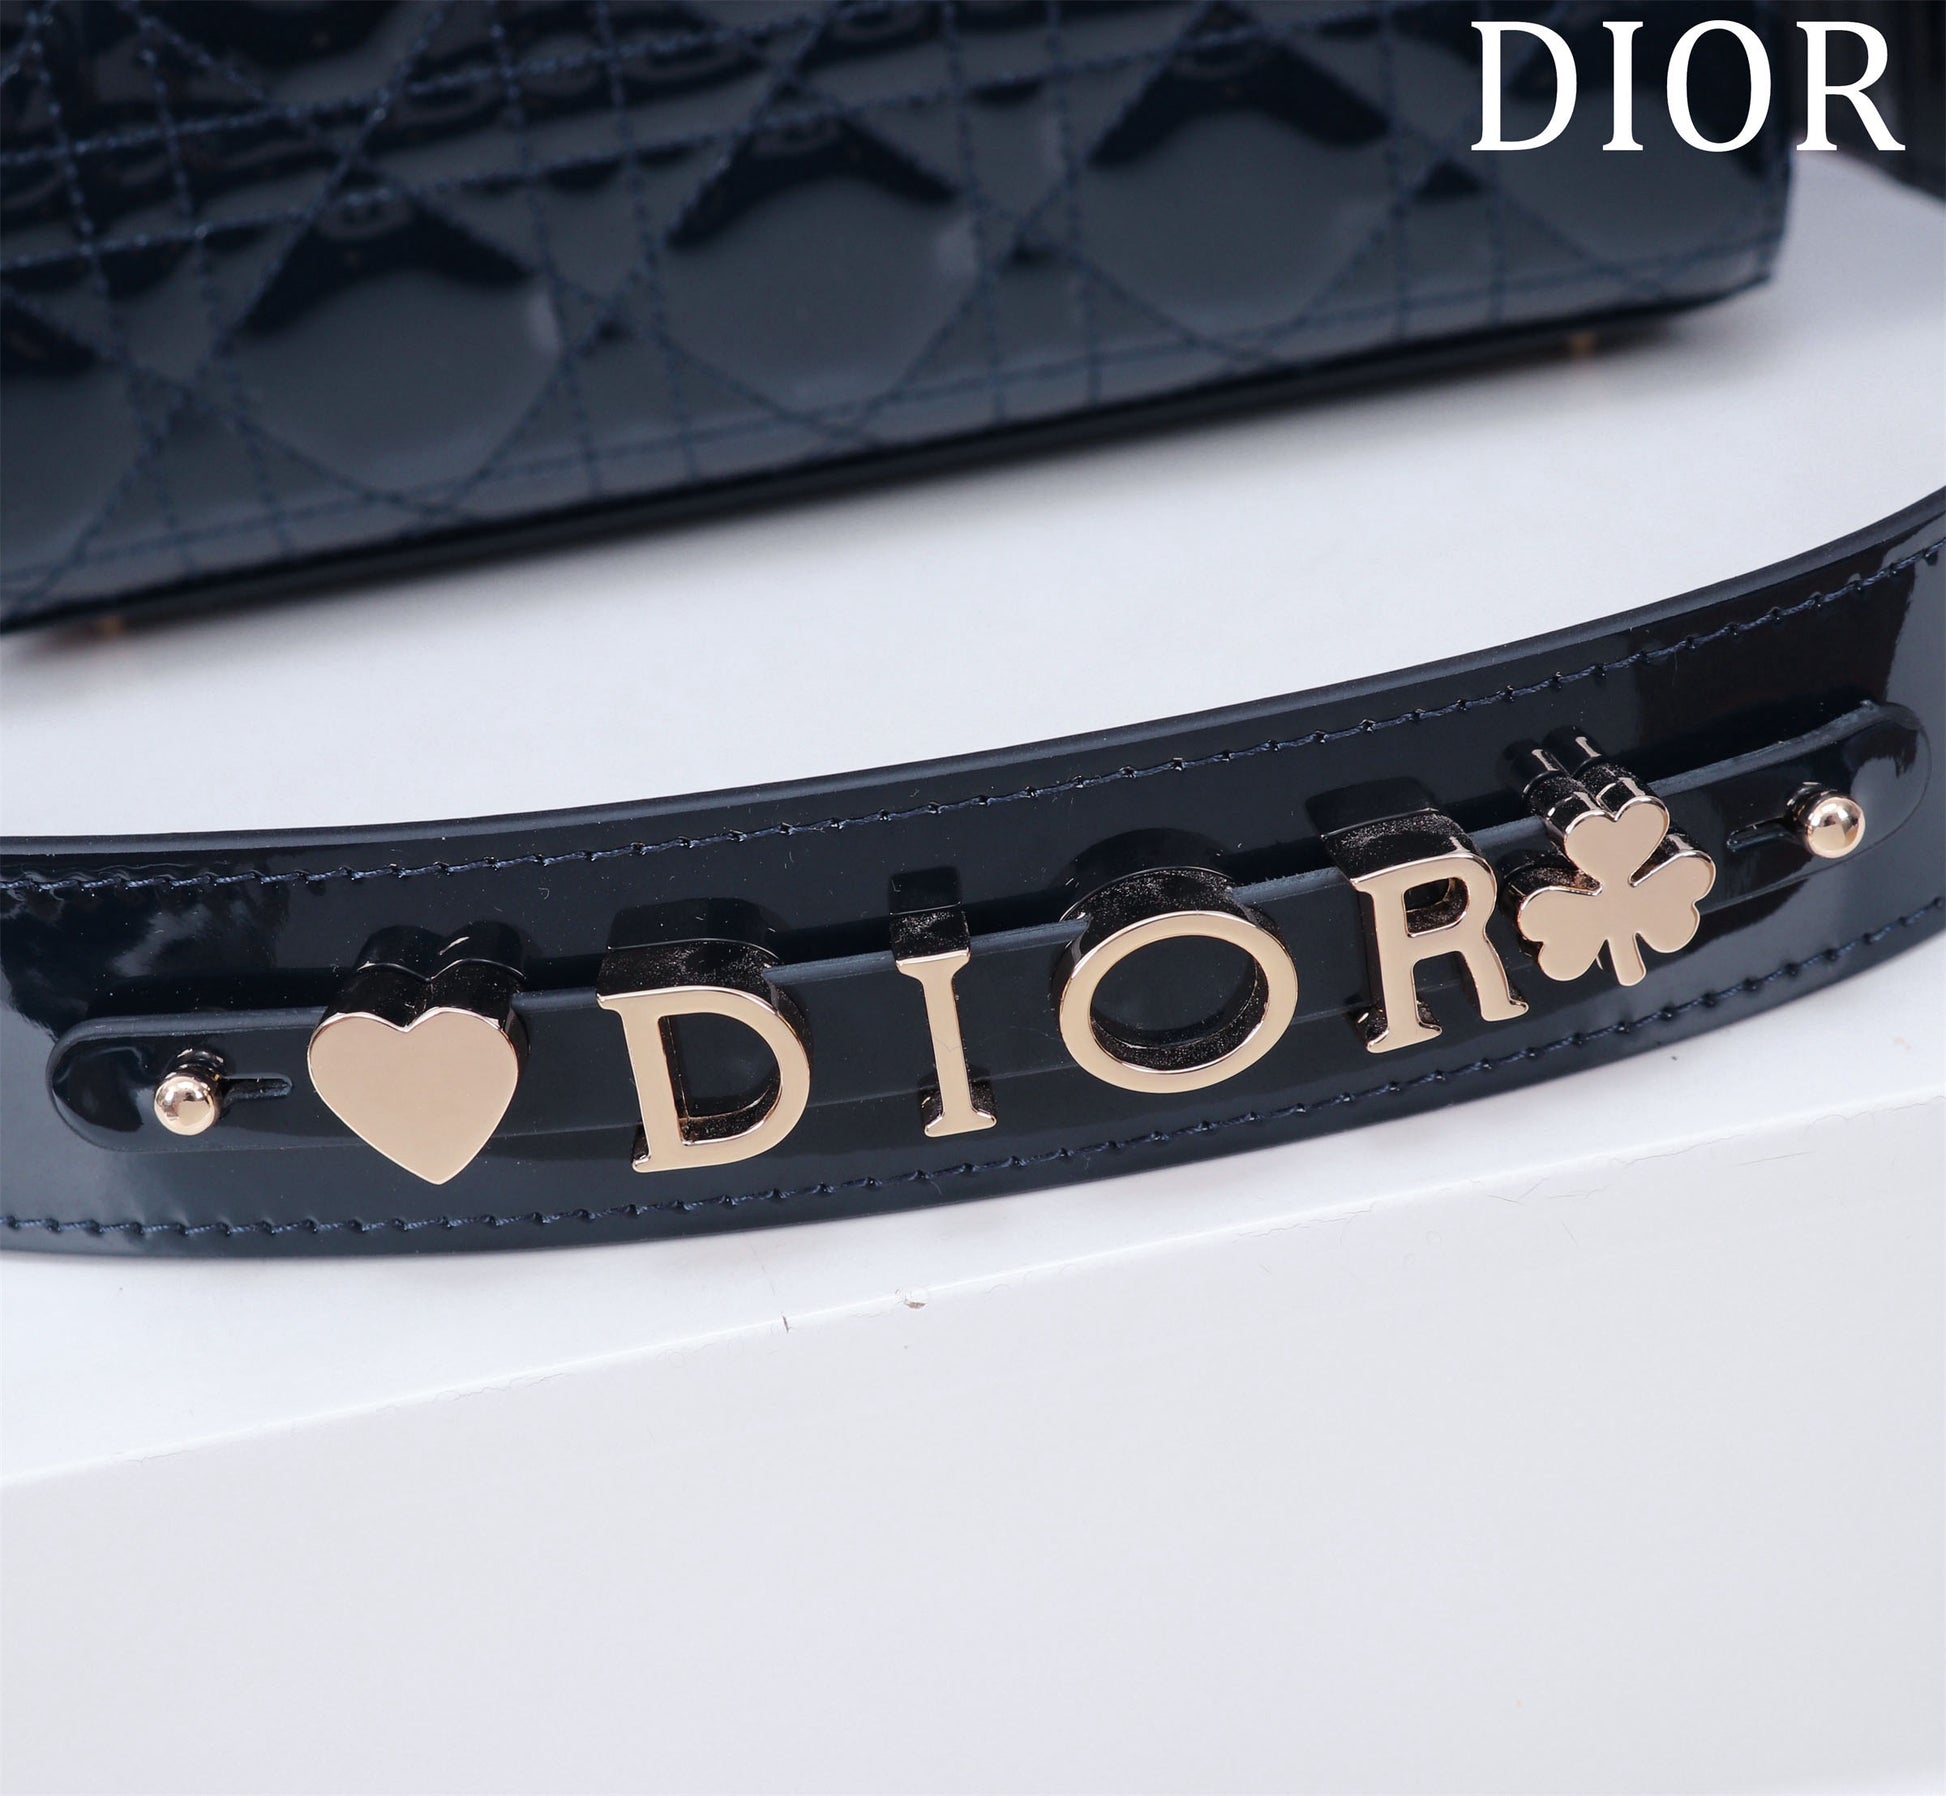 Dior light gold hardware of Lady Dior